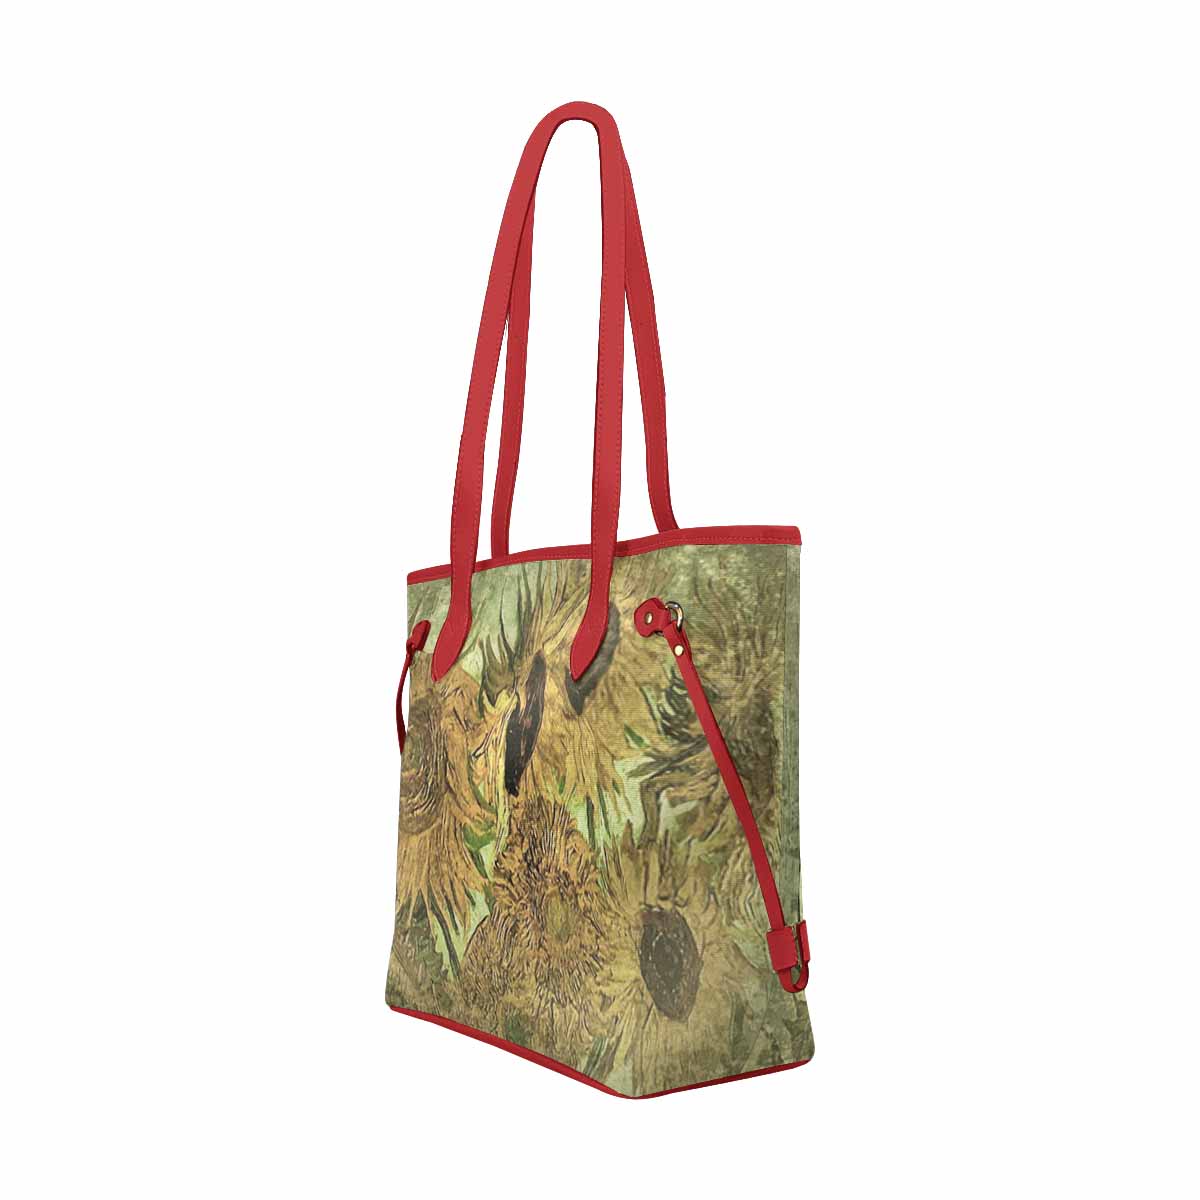 Vintage Floral Handbag, Classic Handbag, Mod 1695361, Design 48x RED TRIM